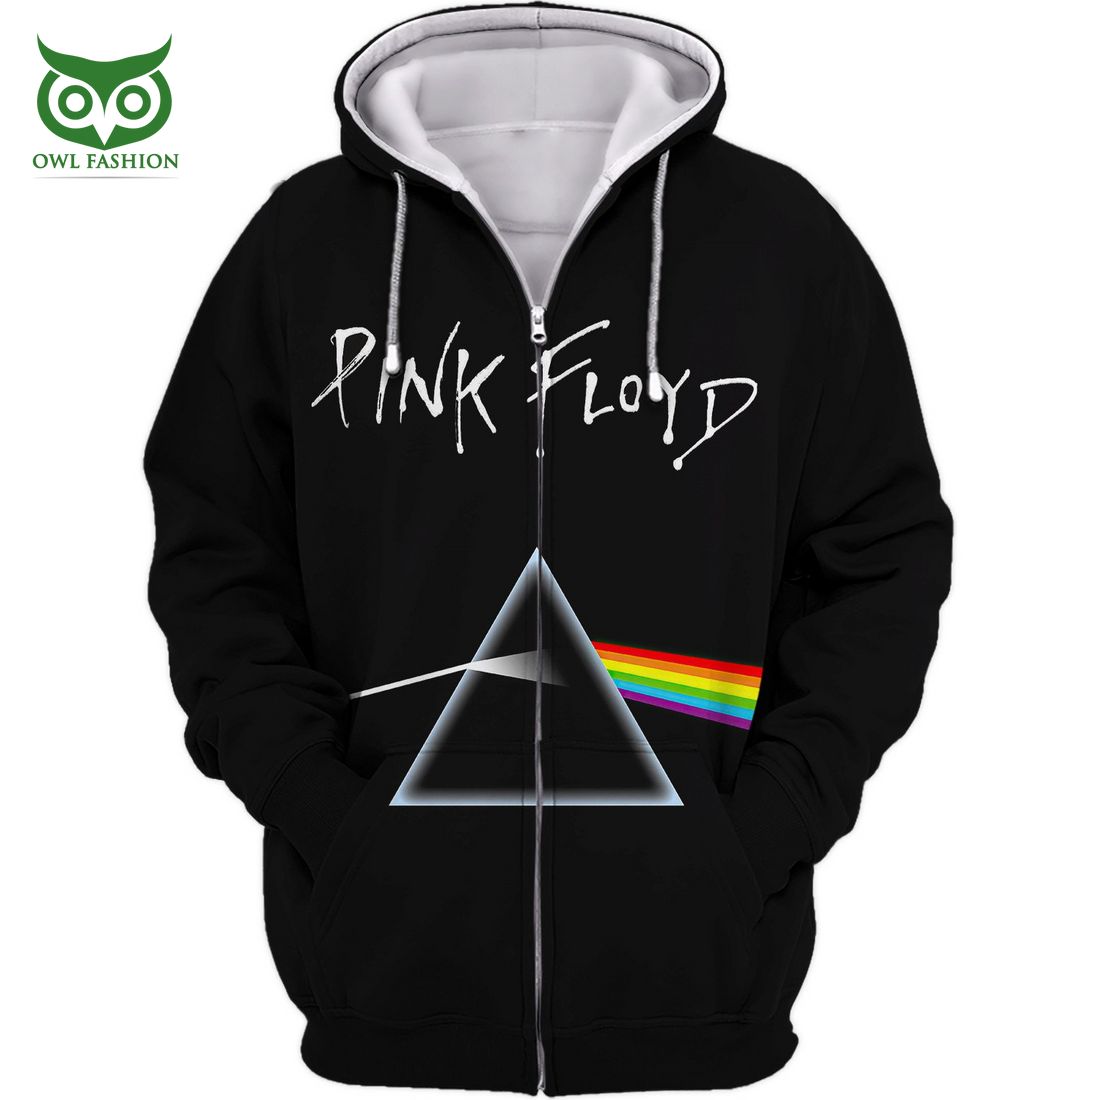 pink floyd fans basic black hoodie t shirt 1 NCsX3